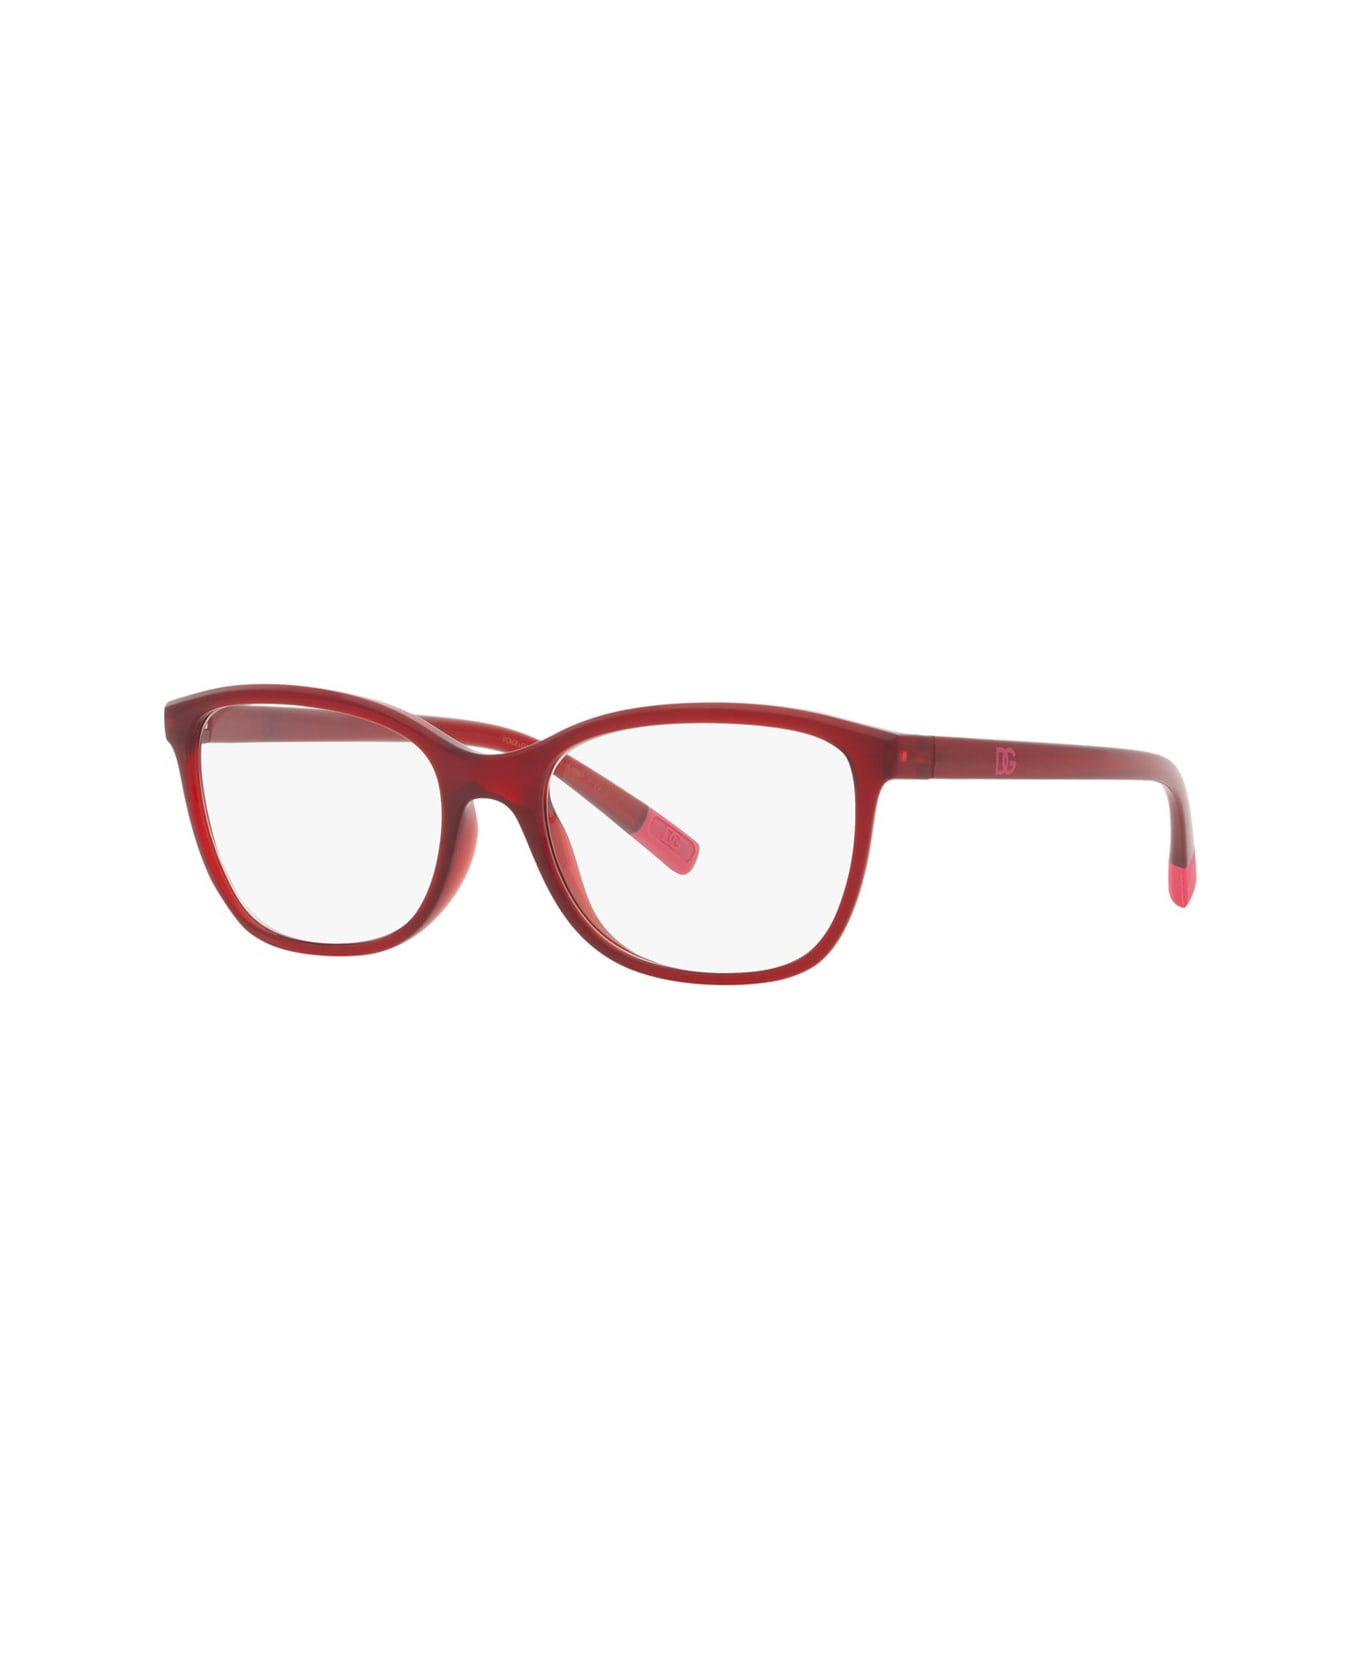 Dolce & Gabbana Eyewear Dg5092 1551 Glasses - Rosso